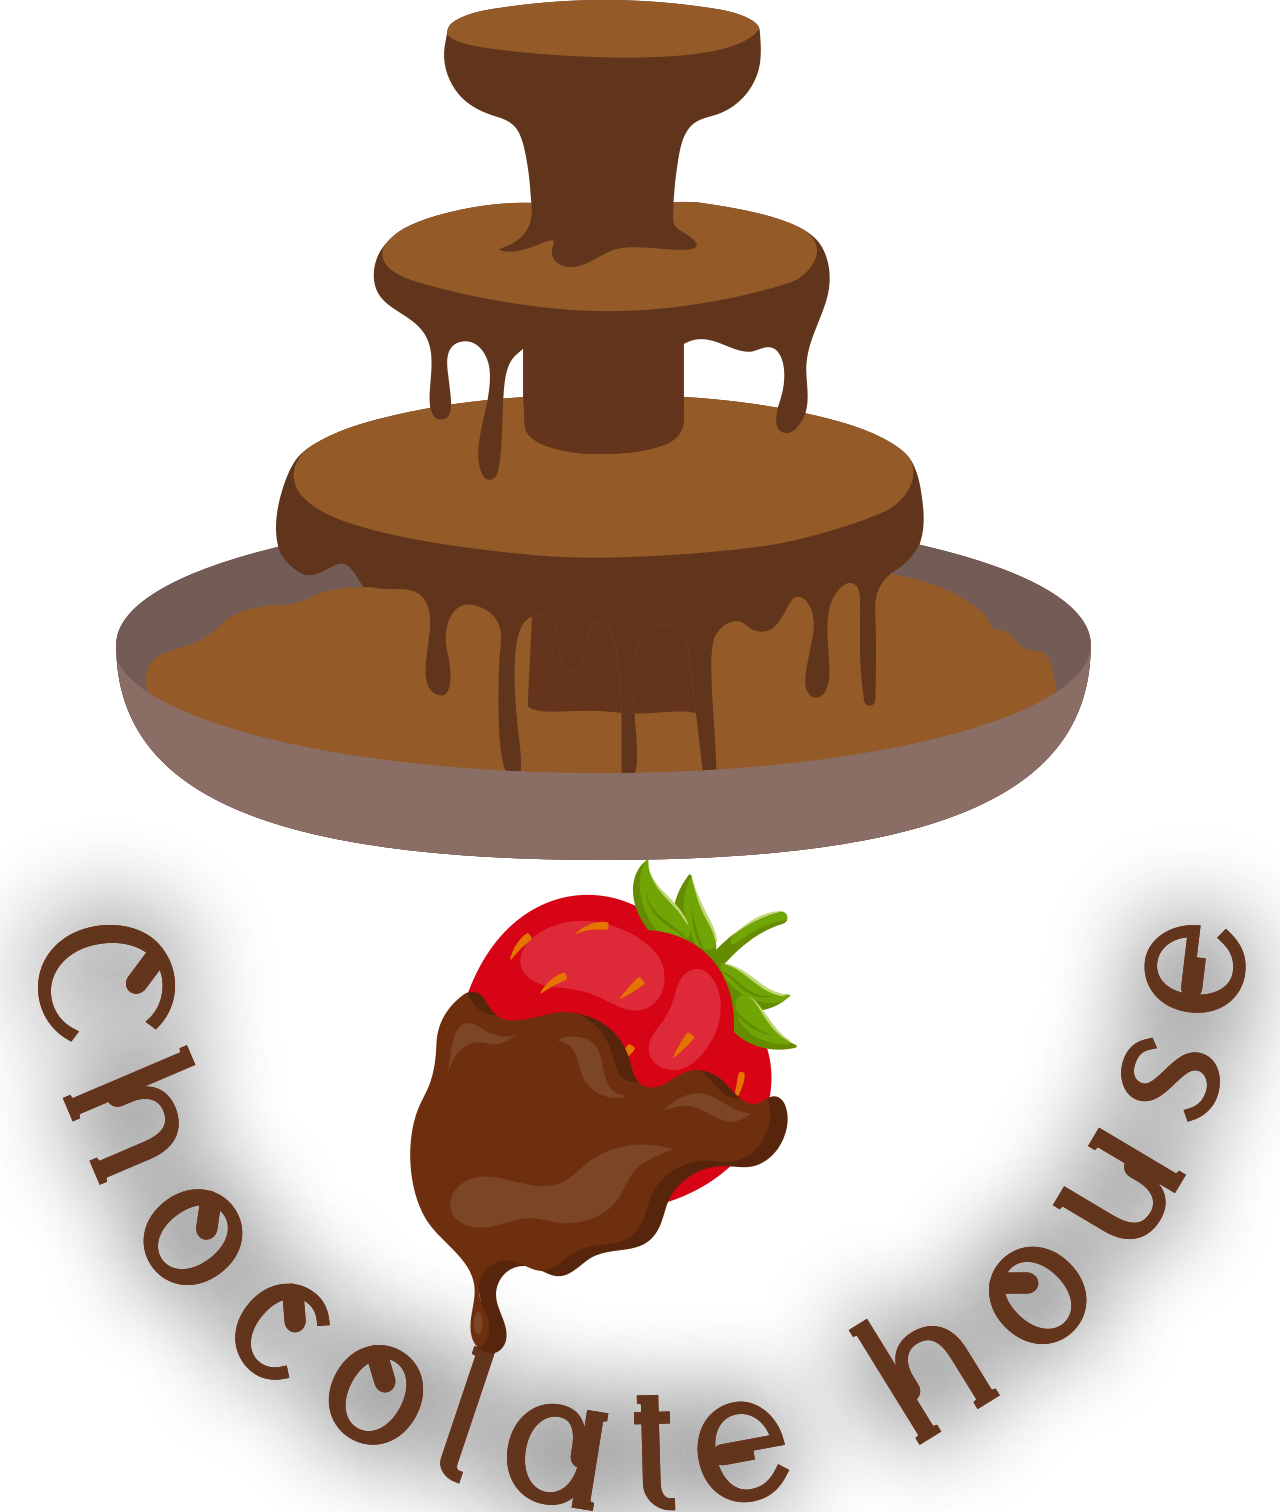 Chocolate house's logo